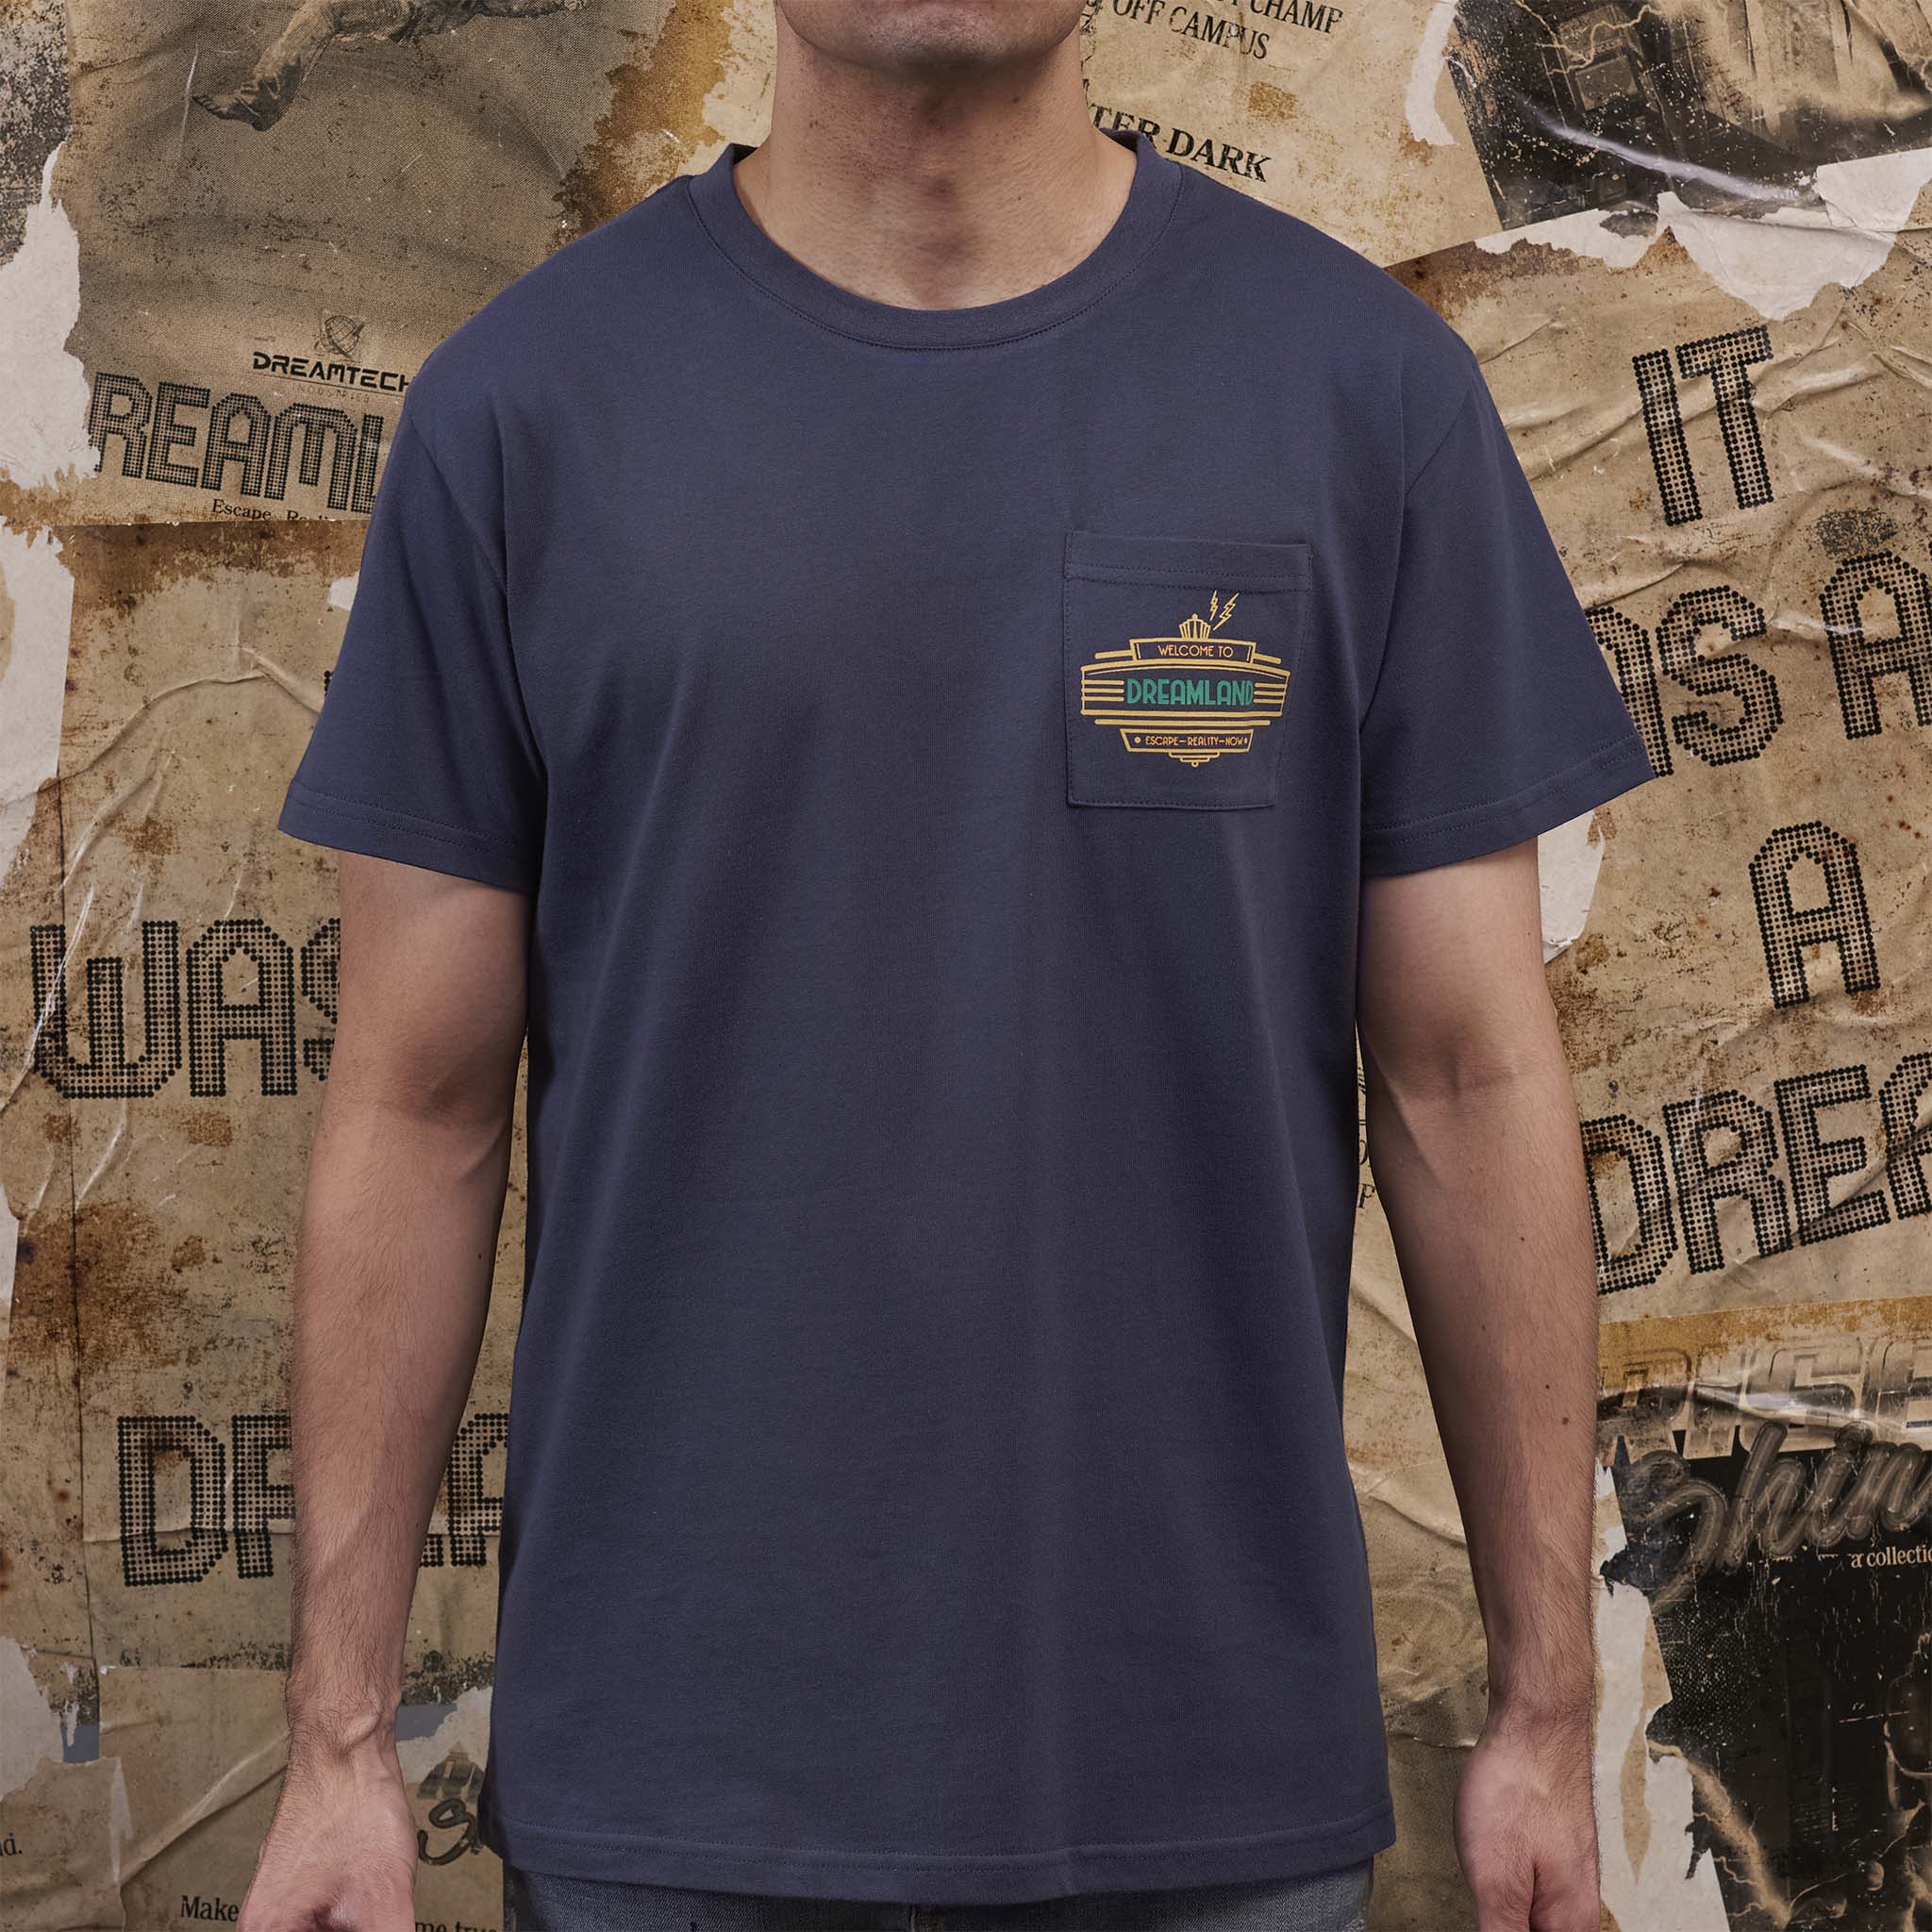 indigo pocket t-shirt with pocket print